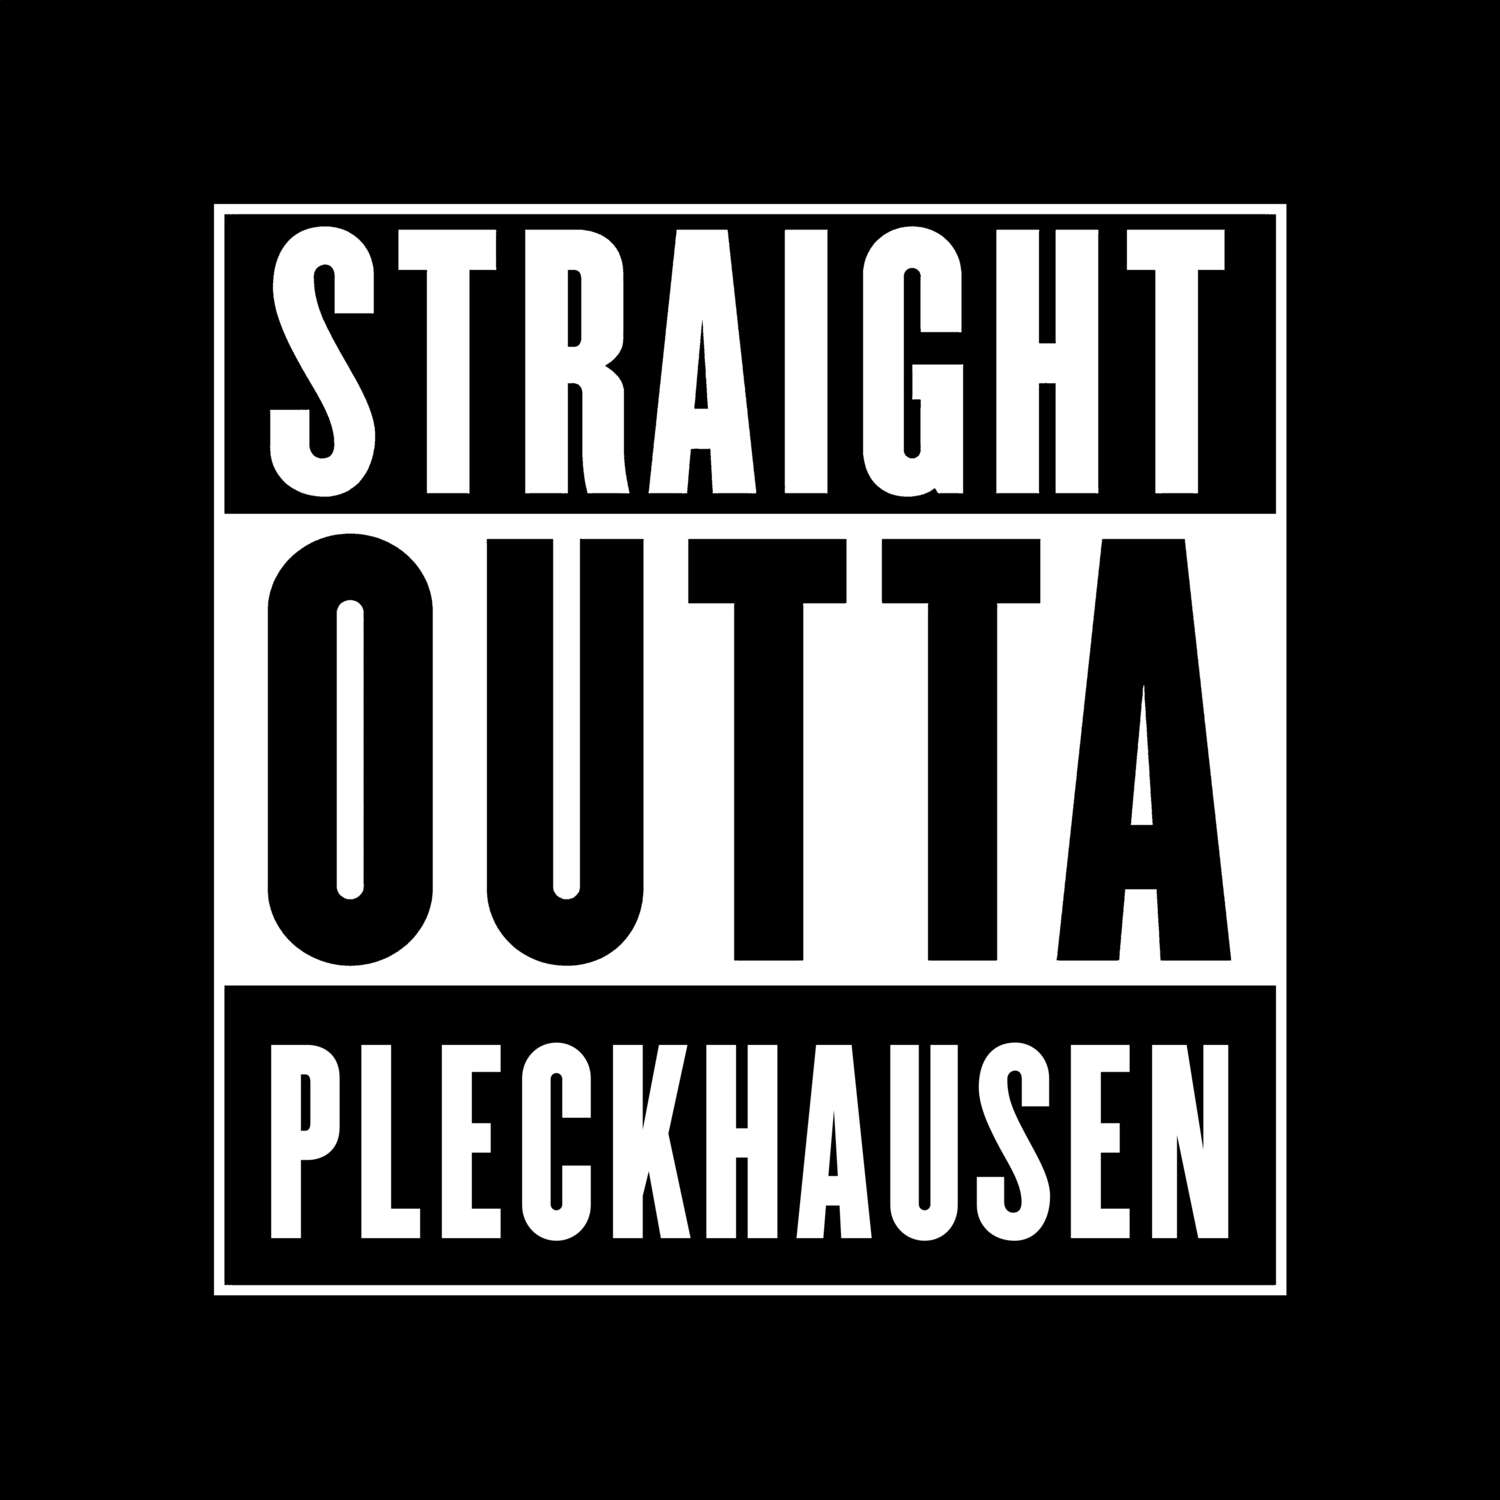 Pleckhausen T-Shirt »Straight Outta«